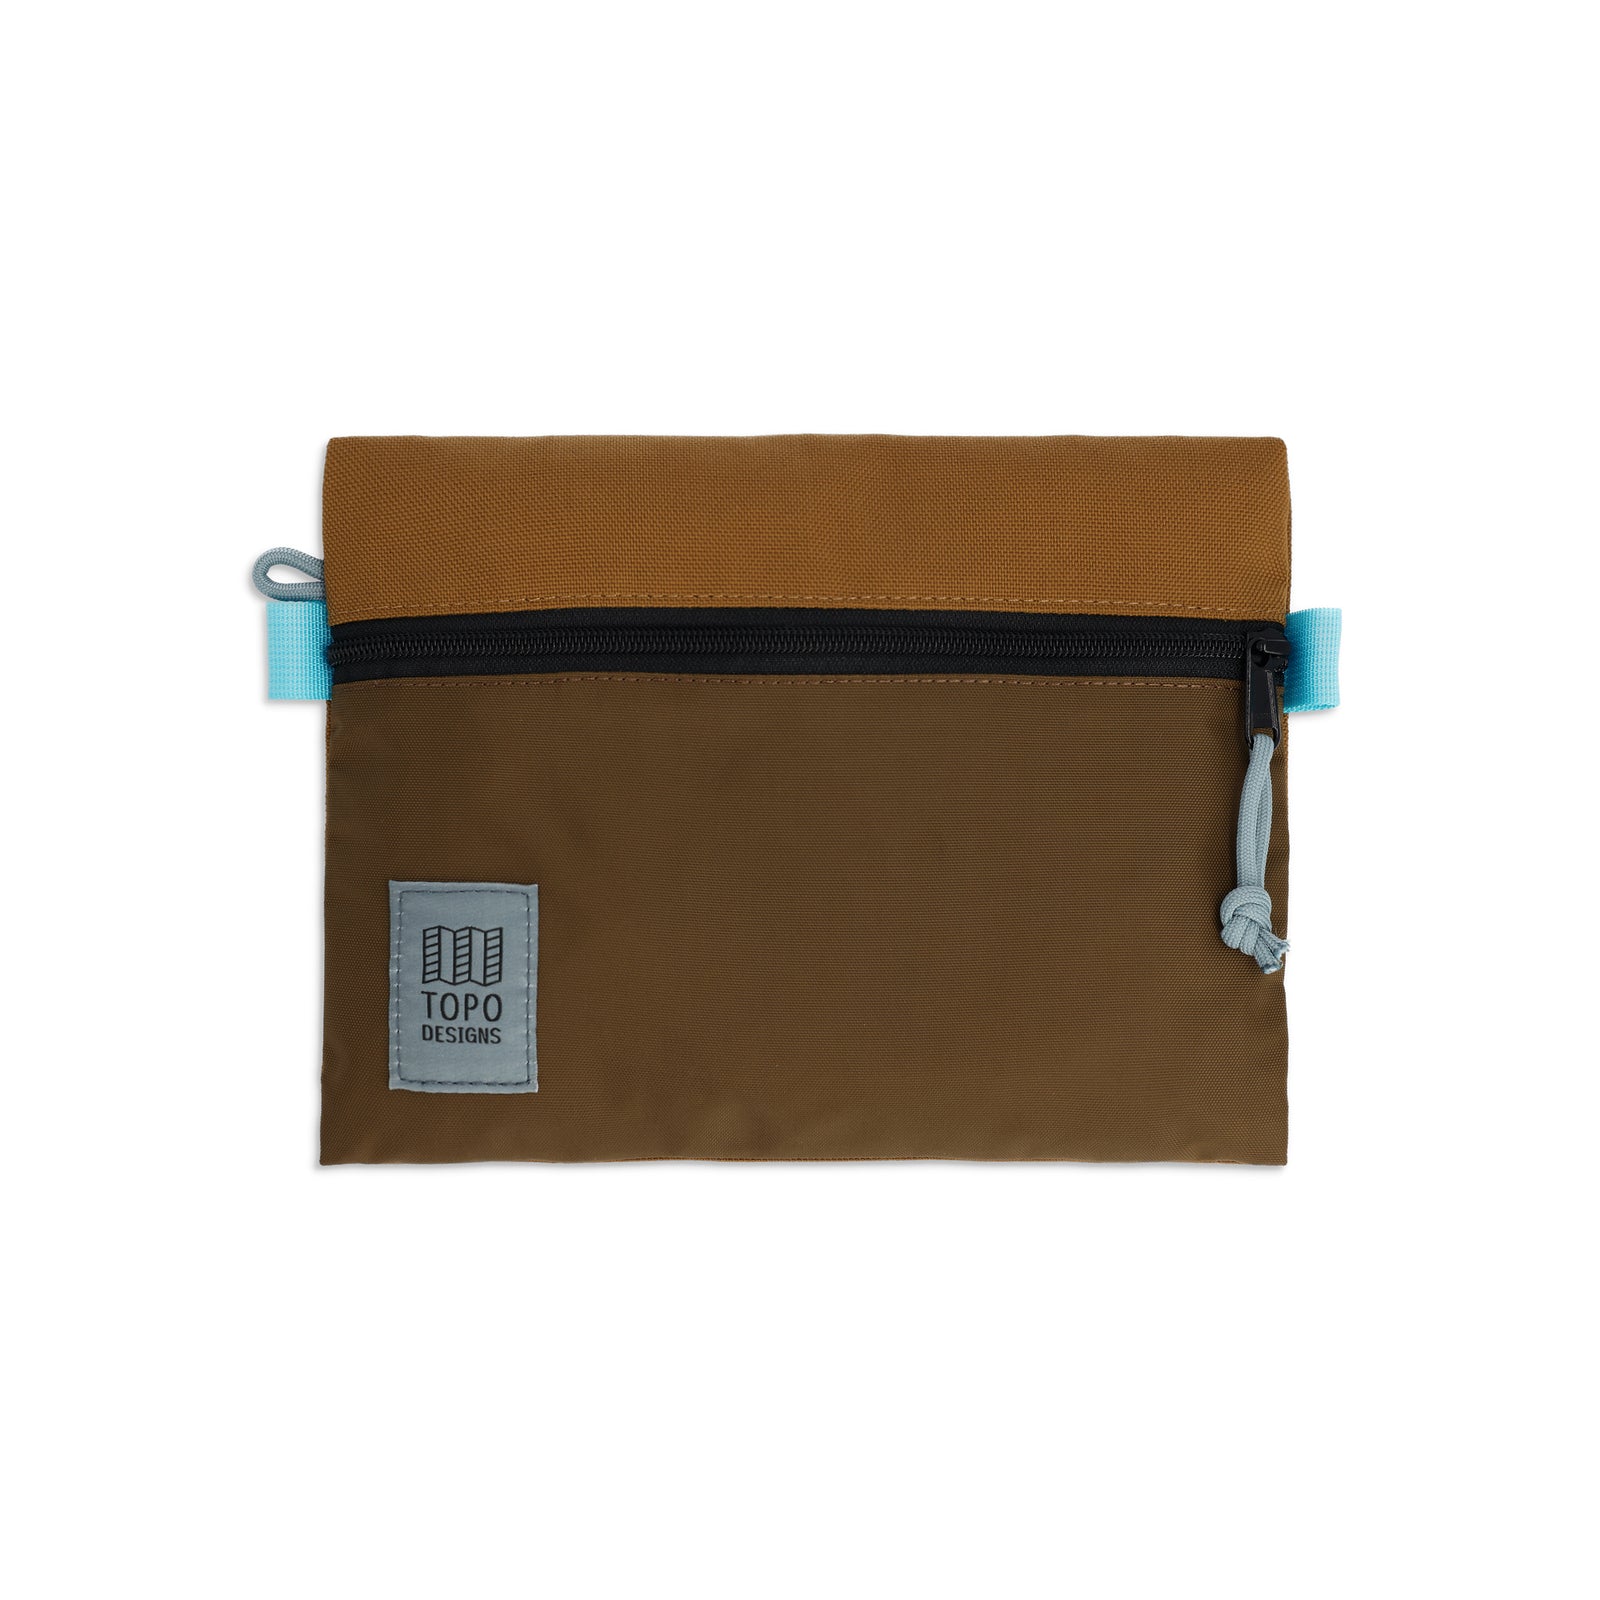 Topo Designs Accessory Bag "Medium" in "Desert Palm / Pond Blue"